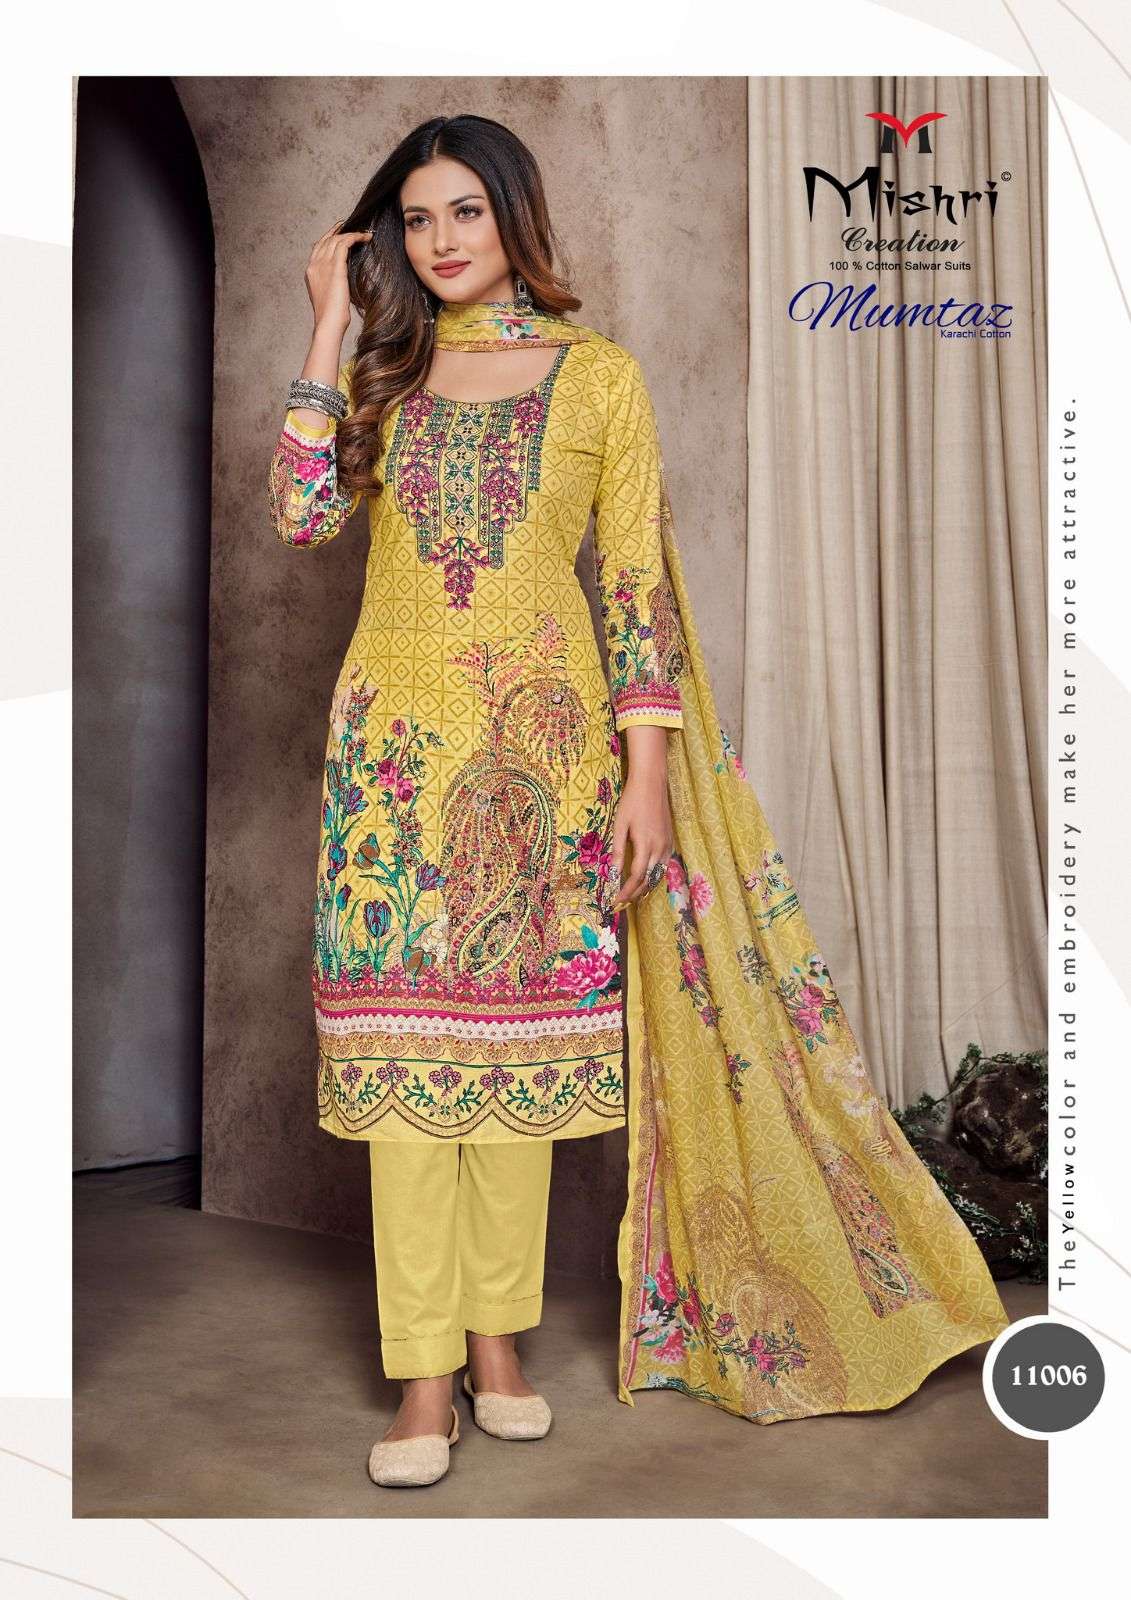 mishri creation mumtaz vol-11 fancy designer salwar suits dress material catalogue wholesale price surat 